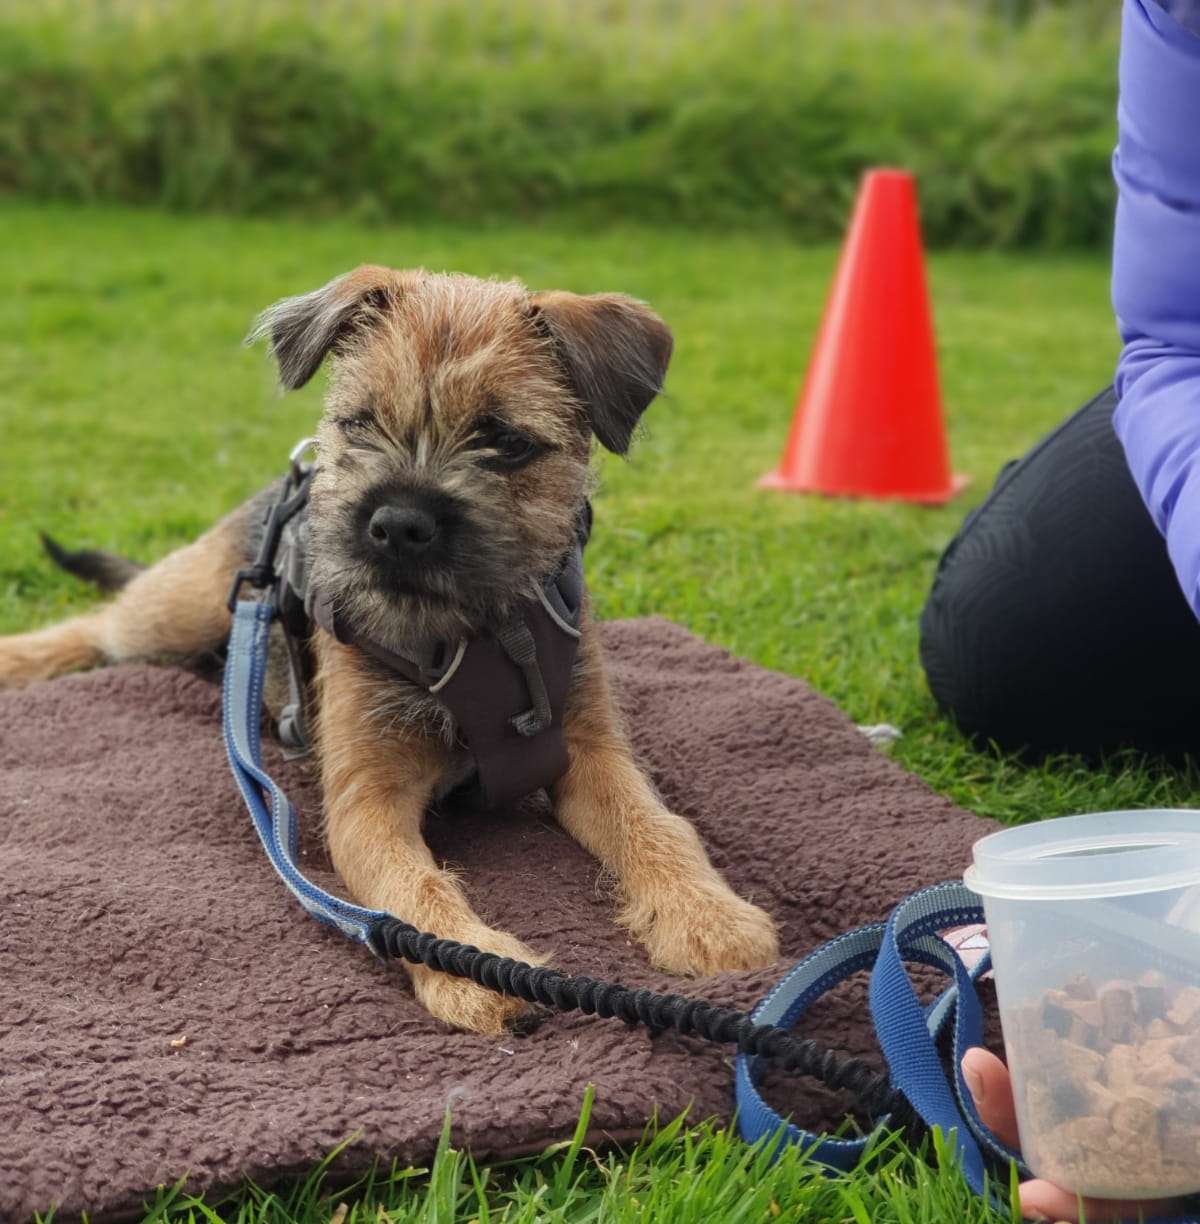 1 to 1 dog training and behaviour support Carlisle, Cumbria